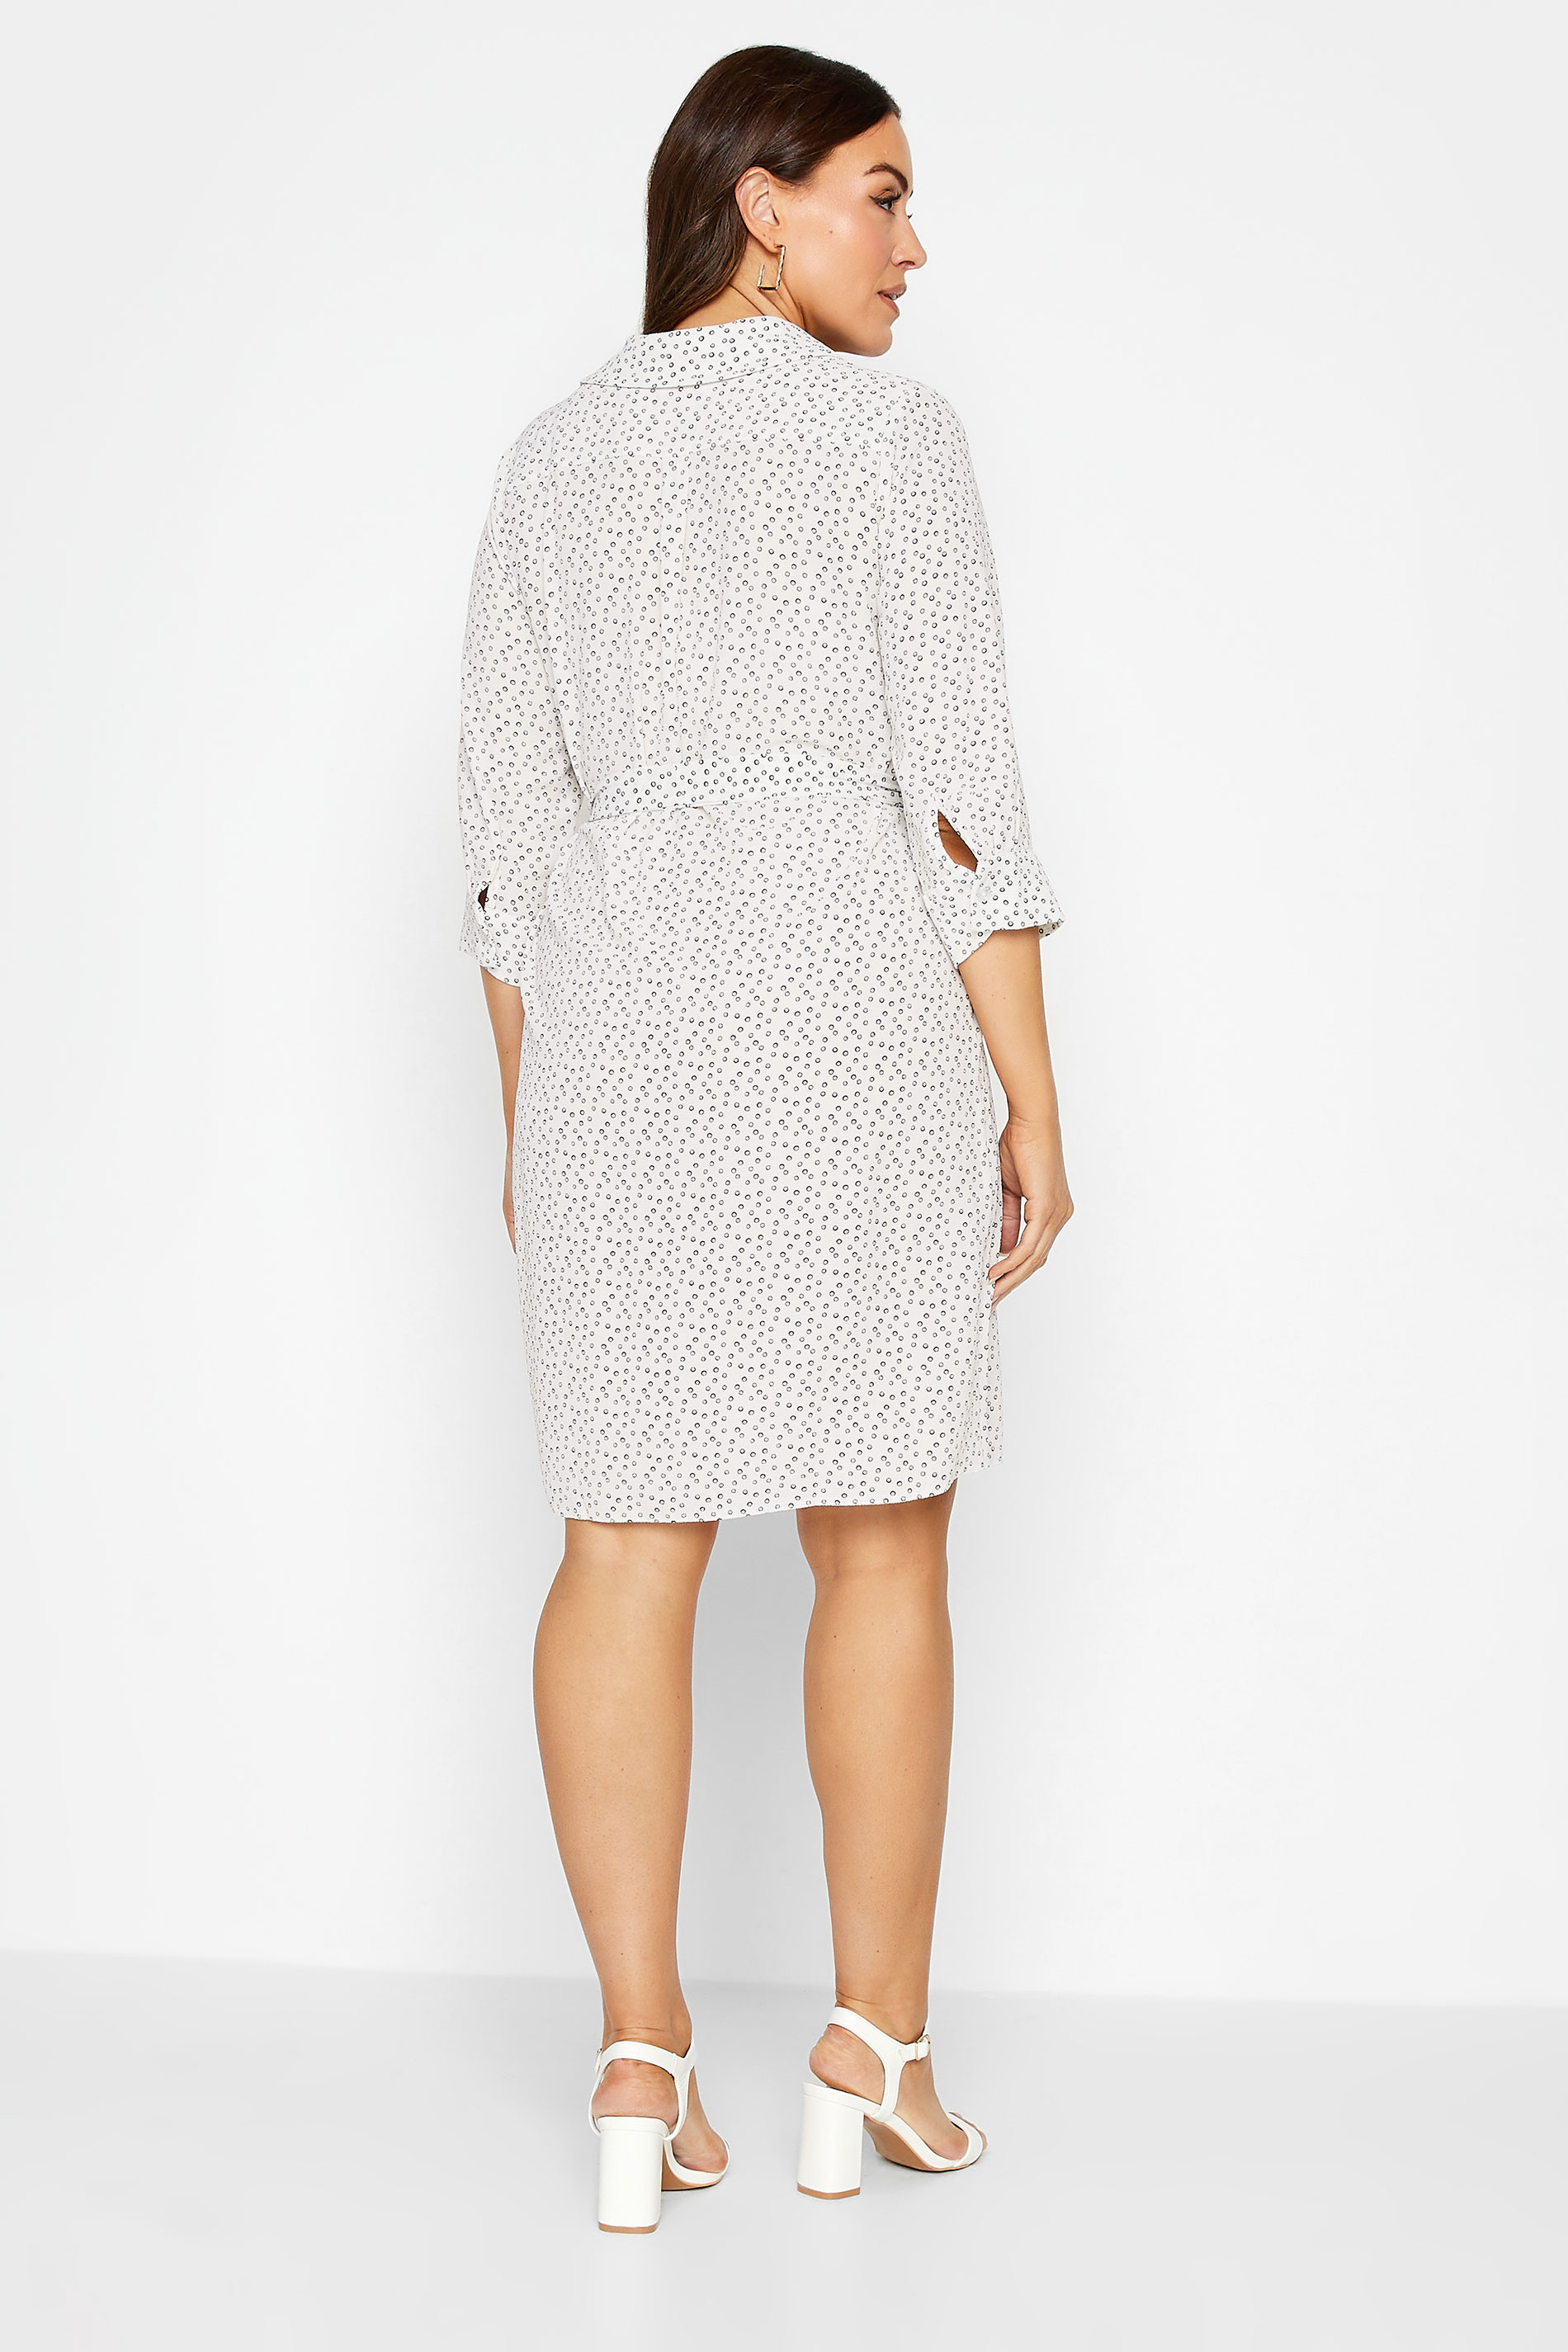 M&Co White Spot Print Tie Waist Tunic Shirt Dress | M&Co 3